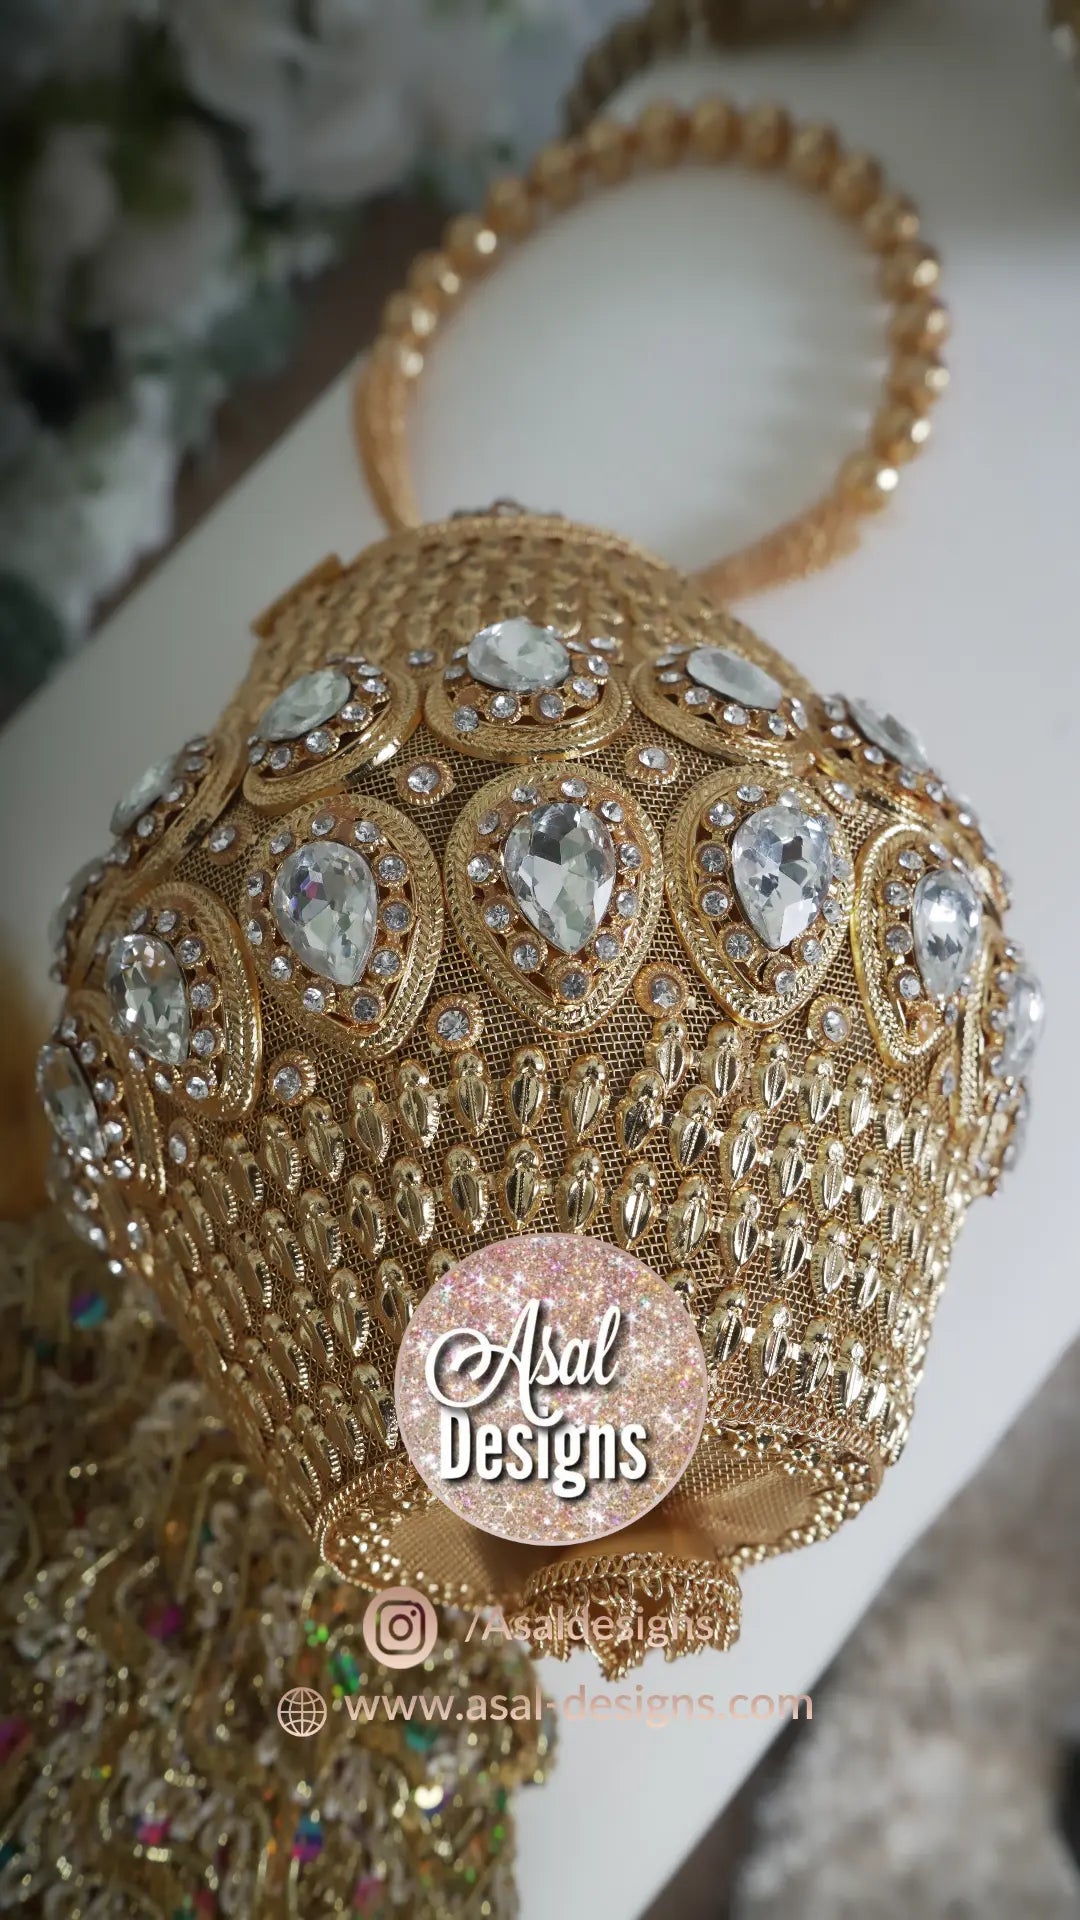 Trend Overseas women gift bridal bag Golden Brass Metal Clutch Sling Bag  Indian Ethnic Antique clutch : Amazon.in: Fashion